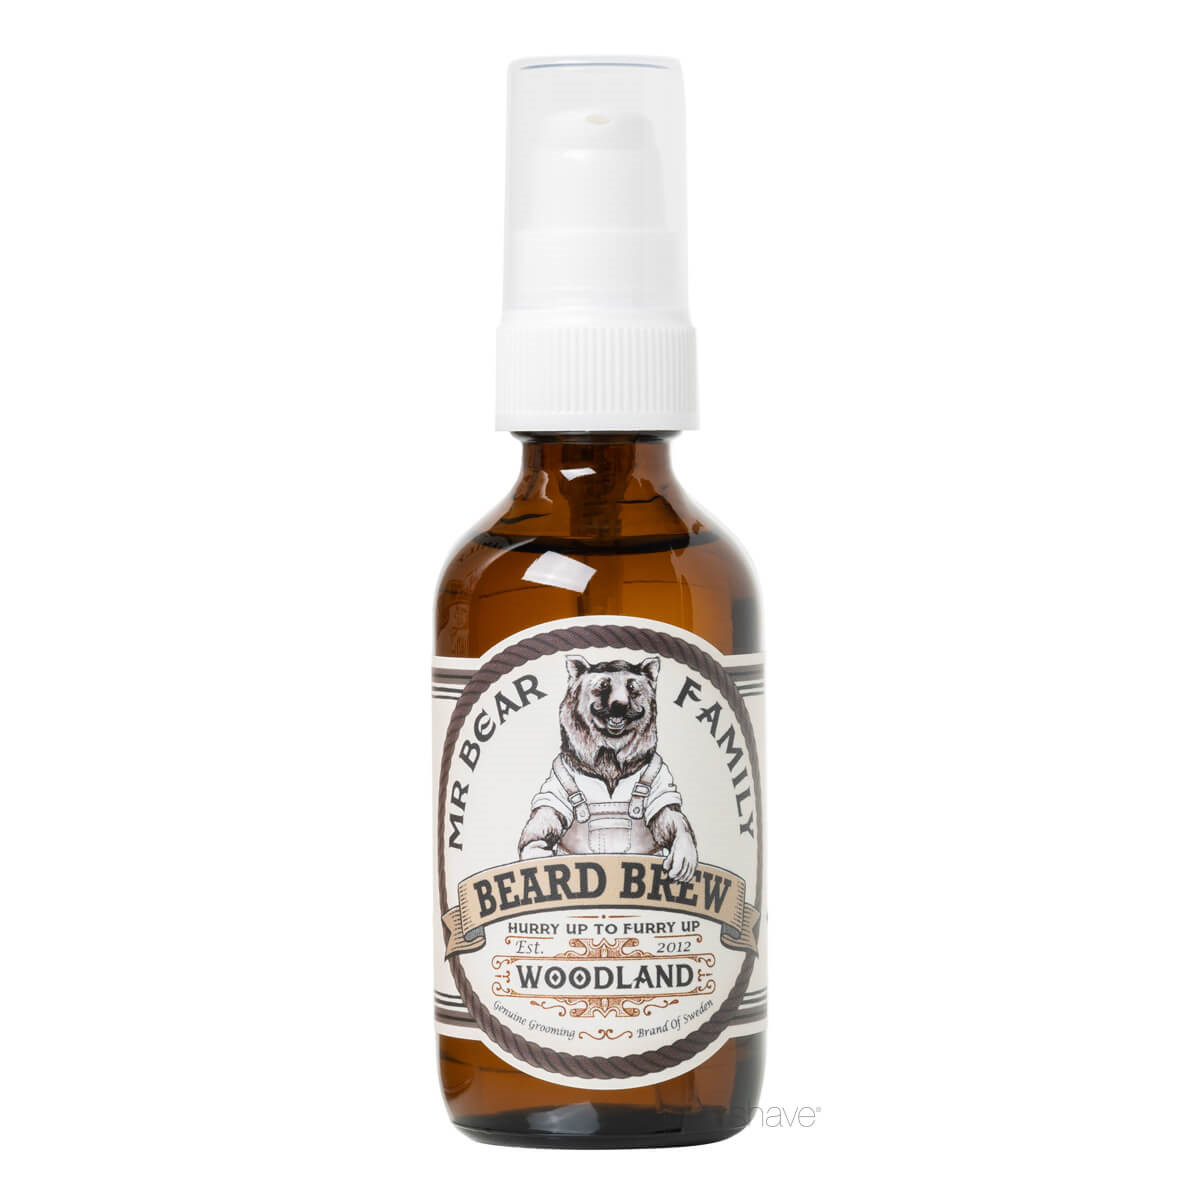 Mr. Bear Skægolie, Beard Brew Oil, Woodland, 60 ml.